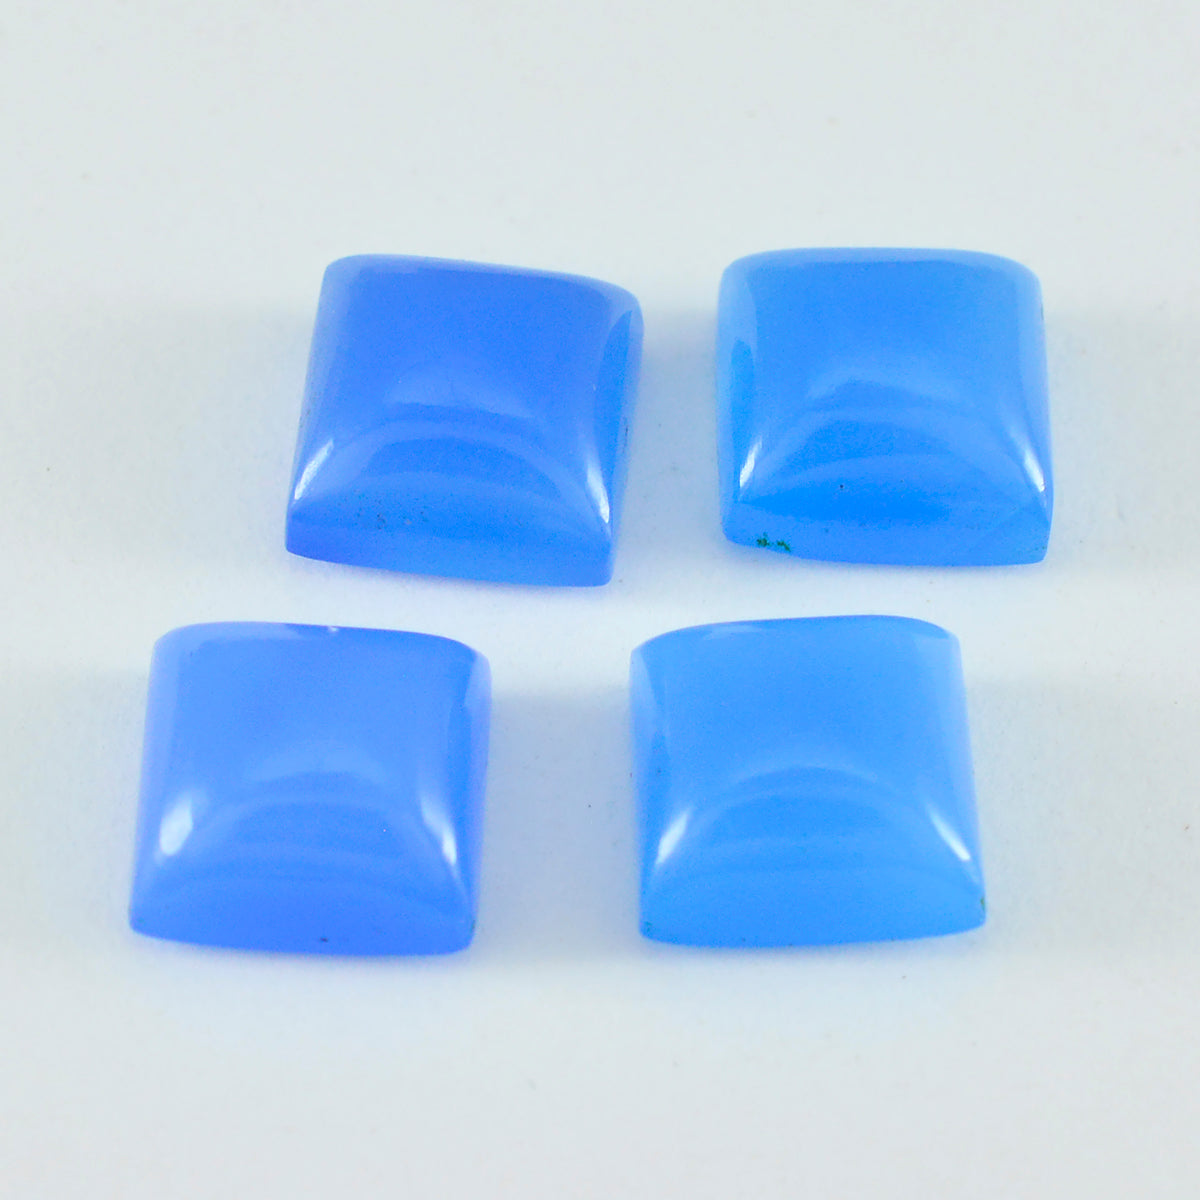 riyogems 1 st blå kalcedon cabochon 11x11 mm fyrkantig form stilig kvalitet lösa ädelstenar